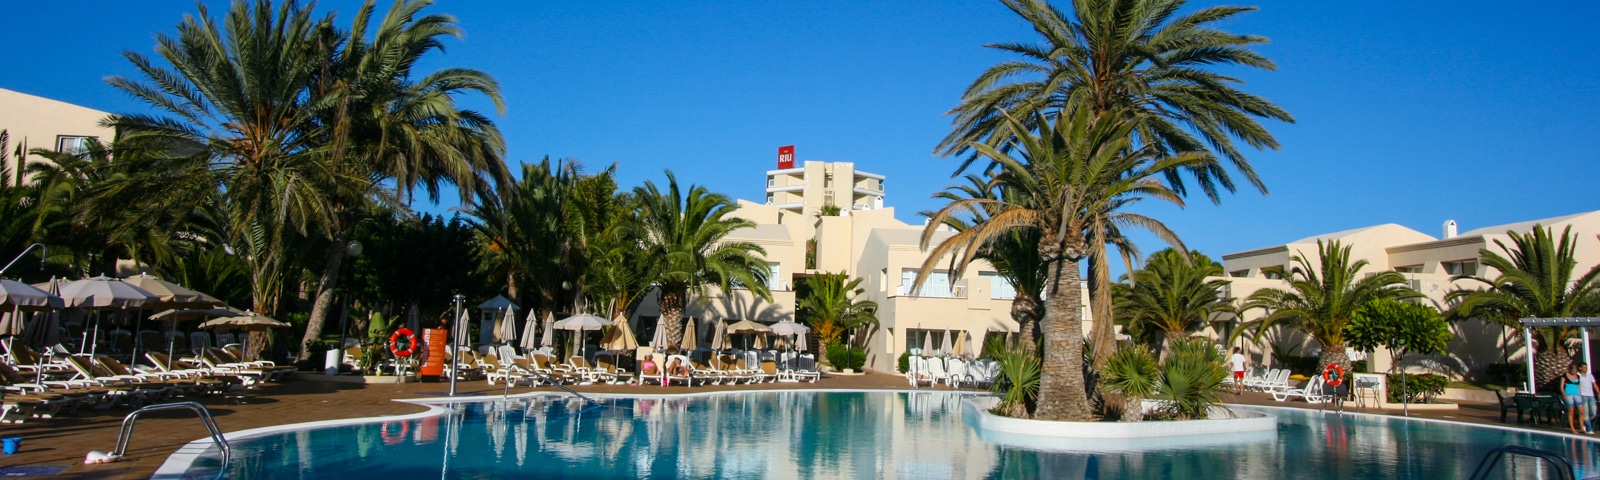 Hotel Riu Oliva Beach Resort ****